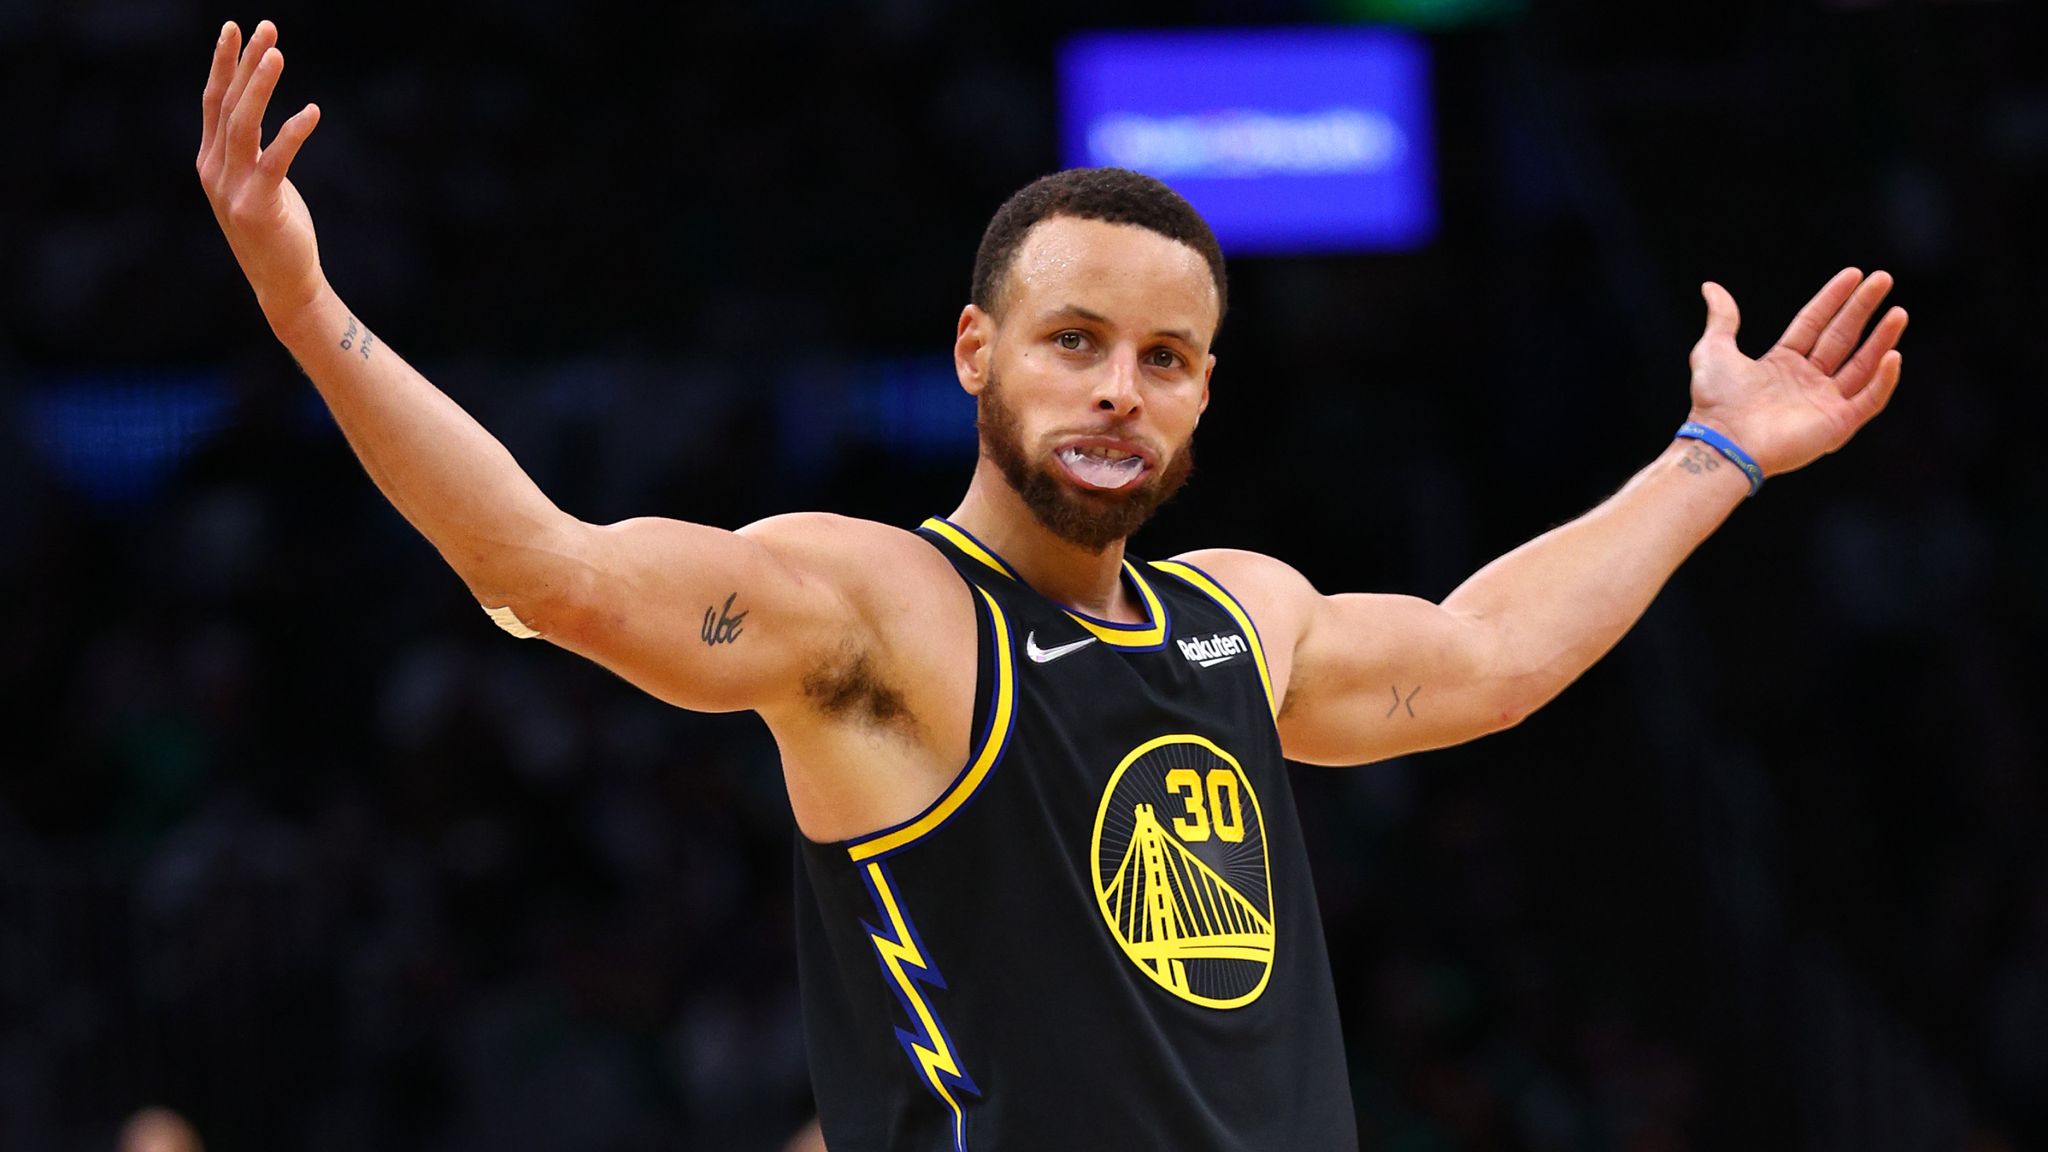 Steph Curry MVP Finals Golden State Warriors 4 Time NBA